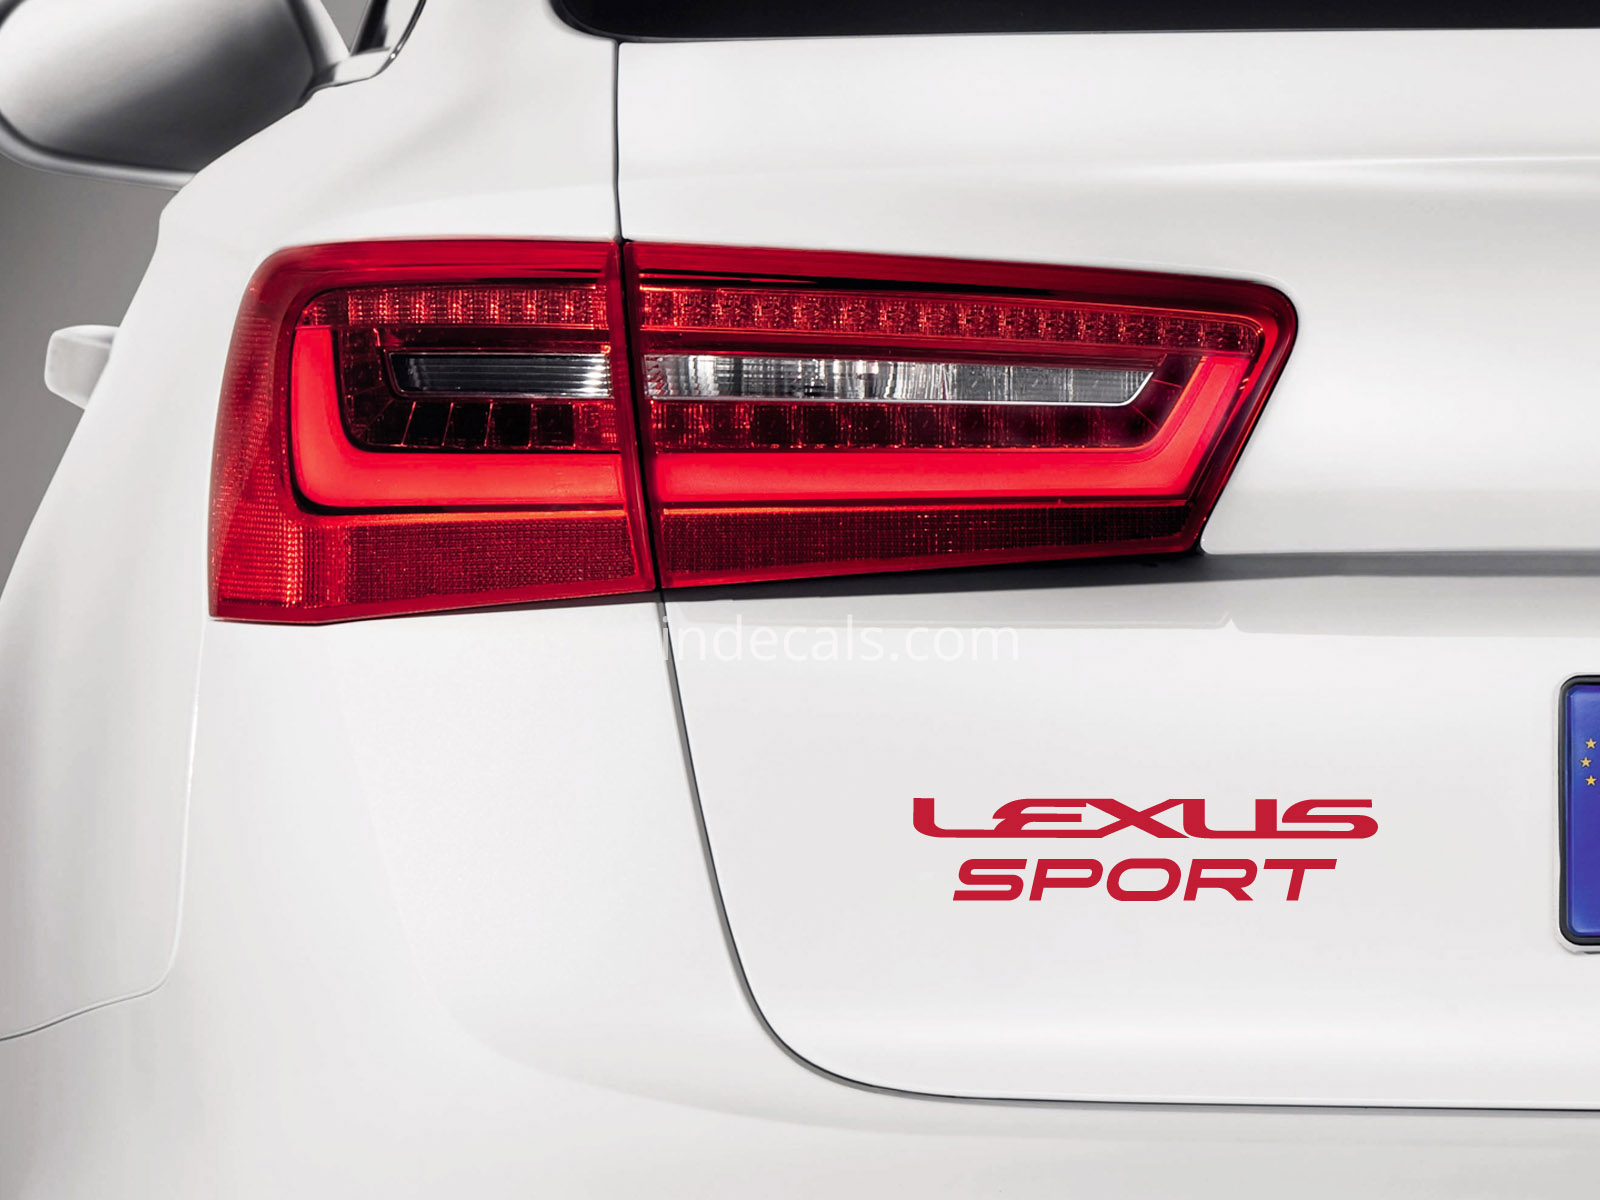 1 x Lexus Sports Sticker for Trunk - Red